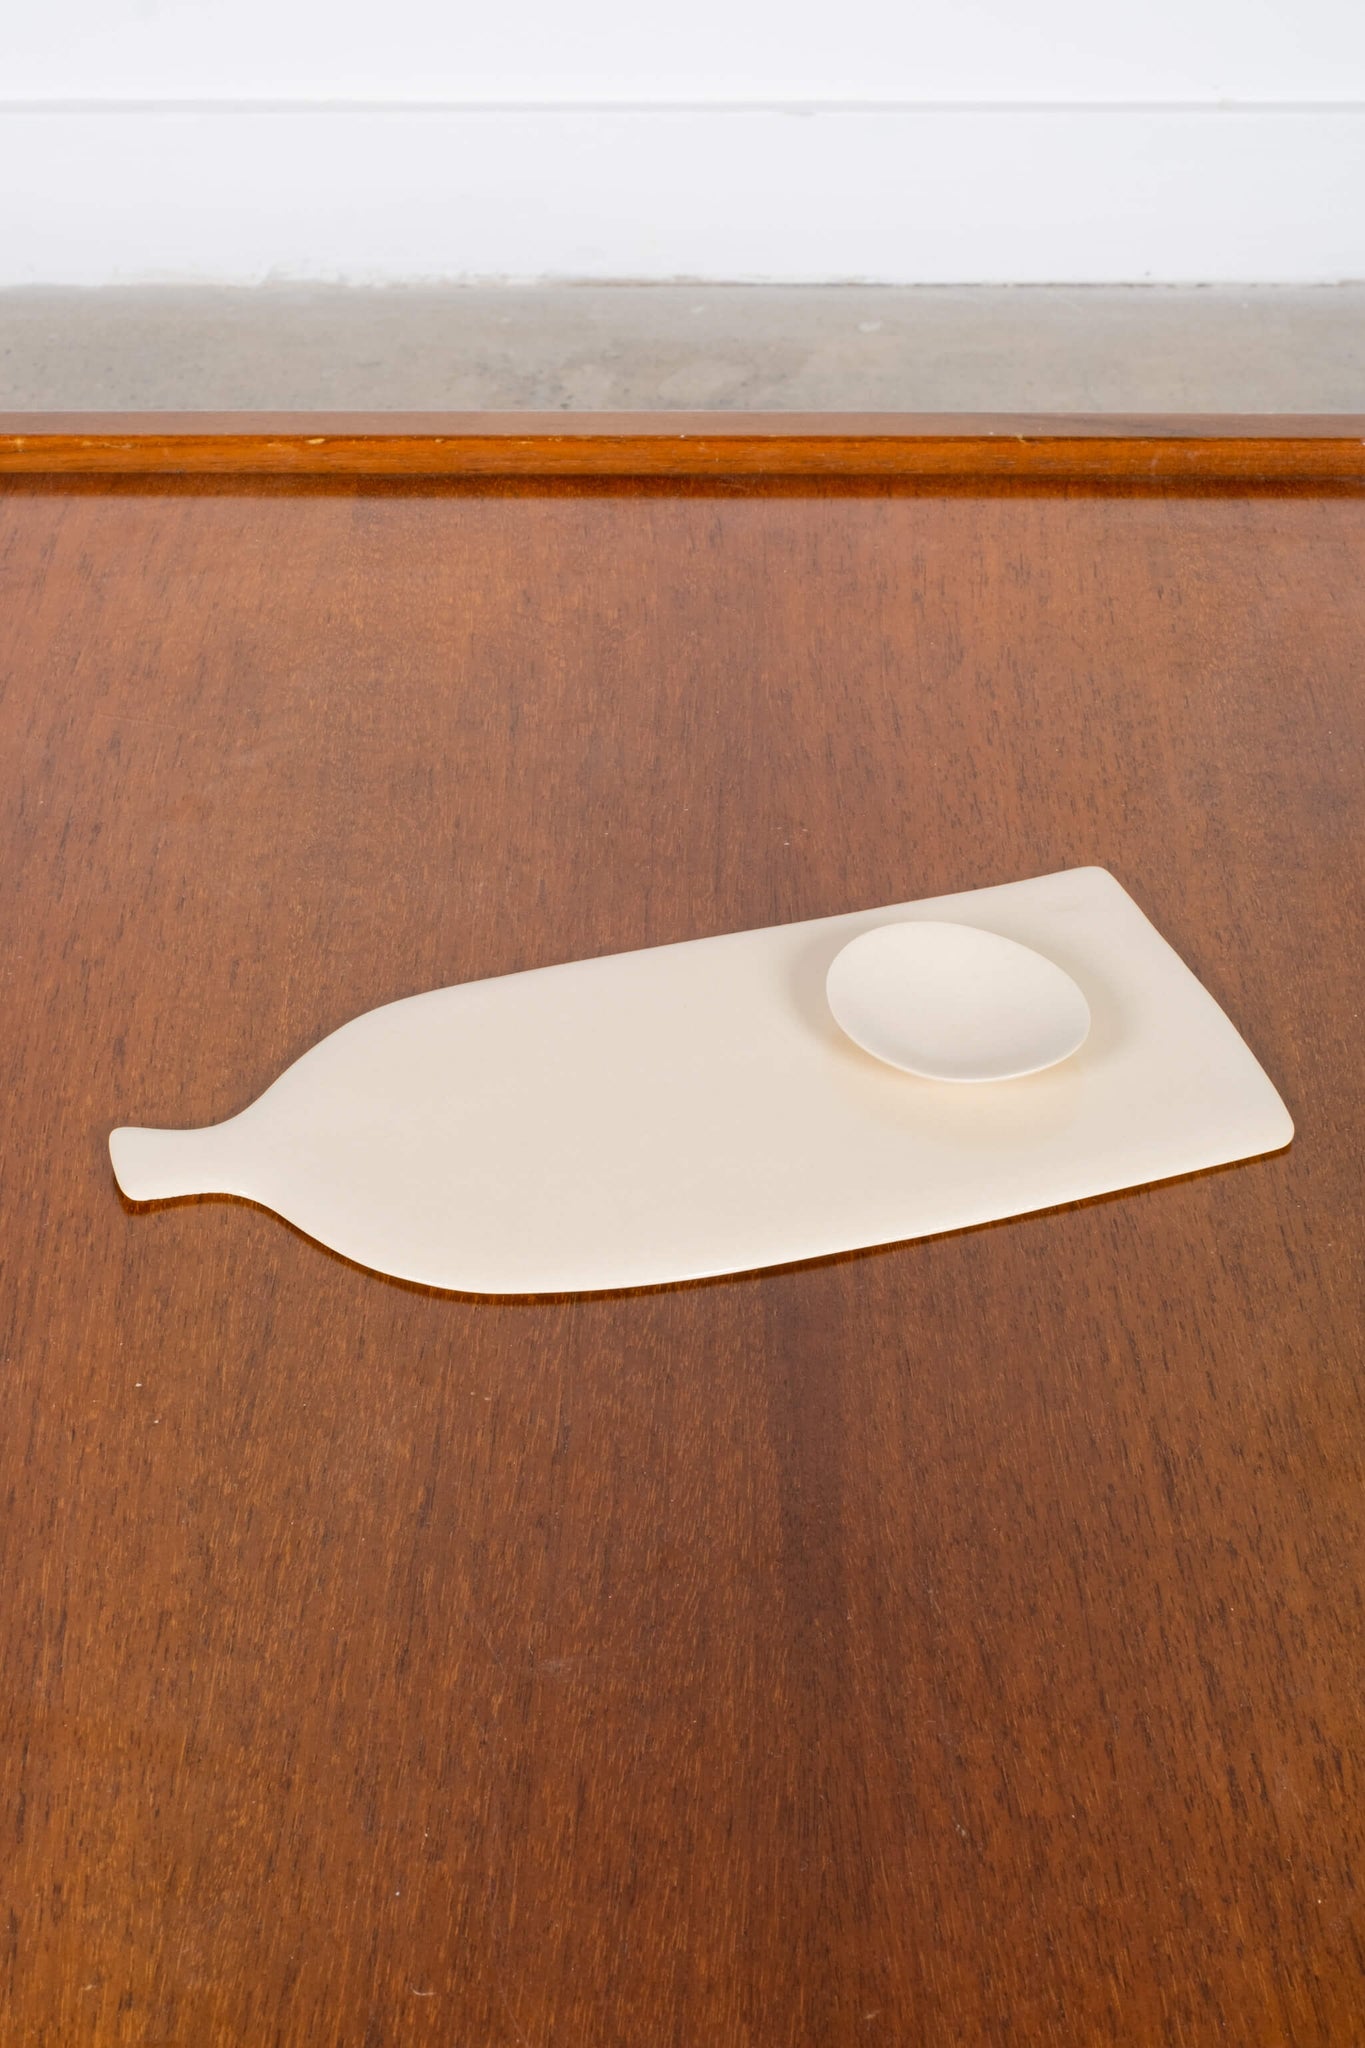 Medium Board + Flake Bowl Kogevina Ceramics, front angled view